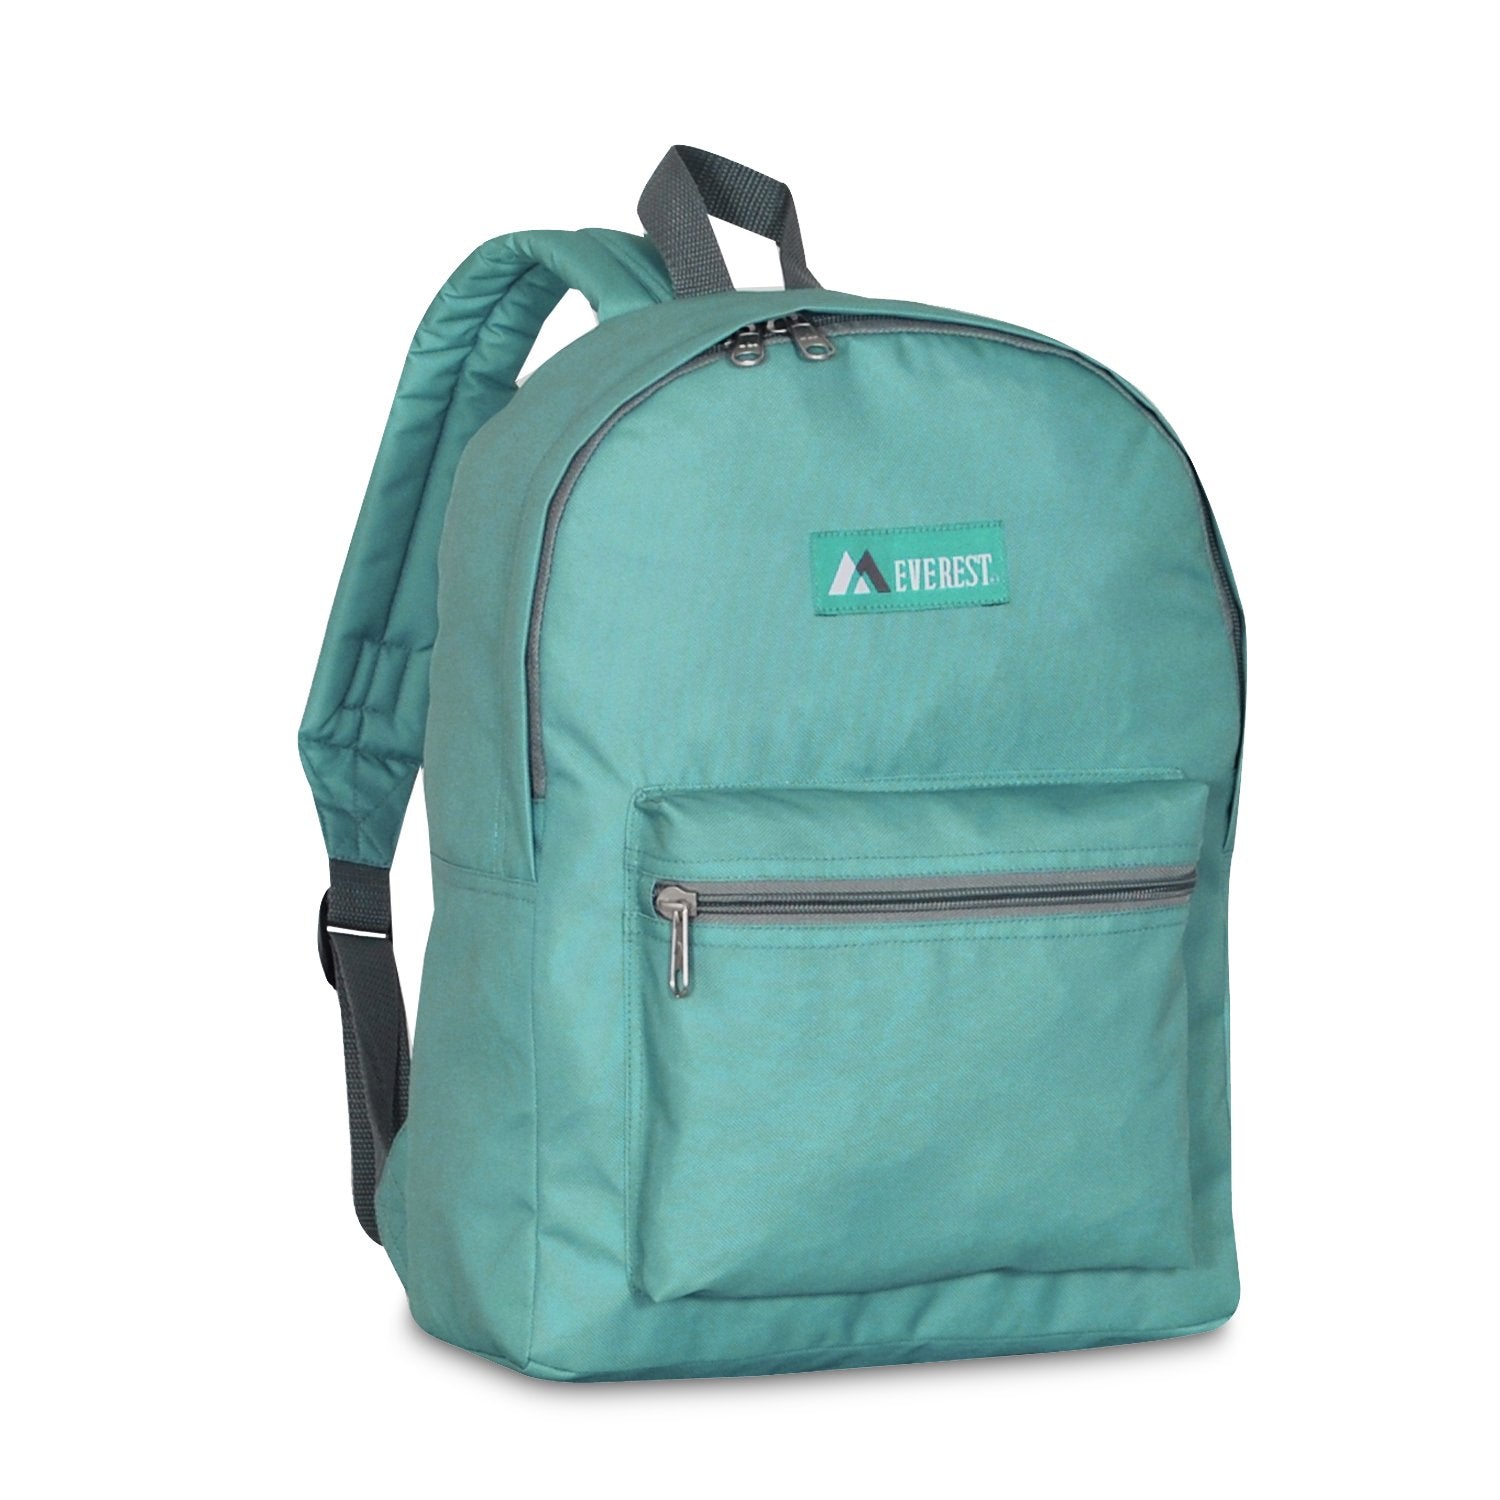 Everest-Basic Backpack-eSafety Supplies, Inc